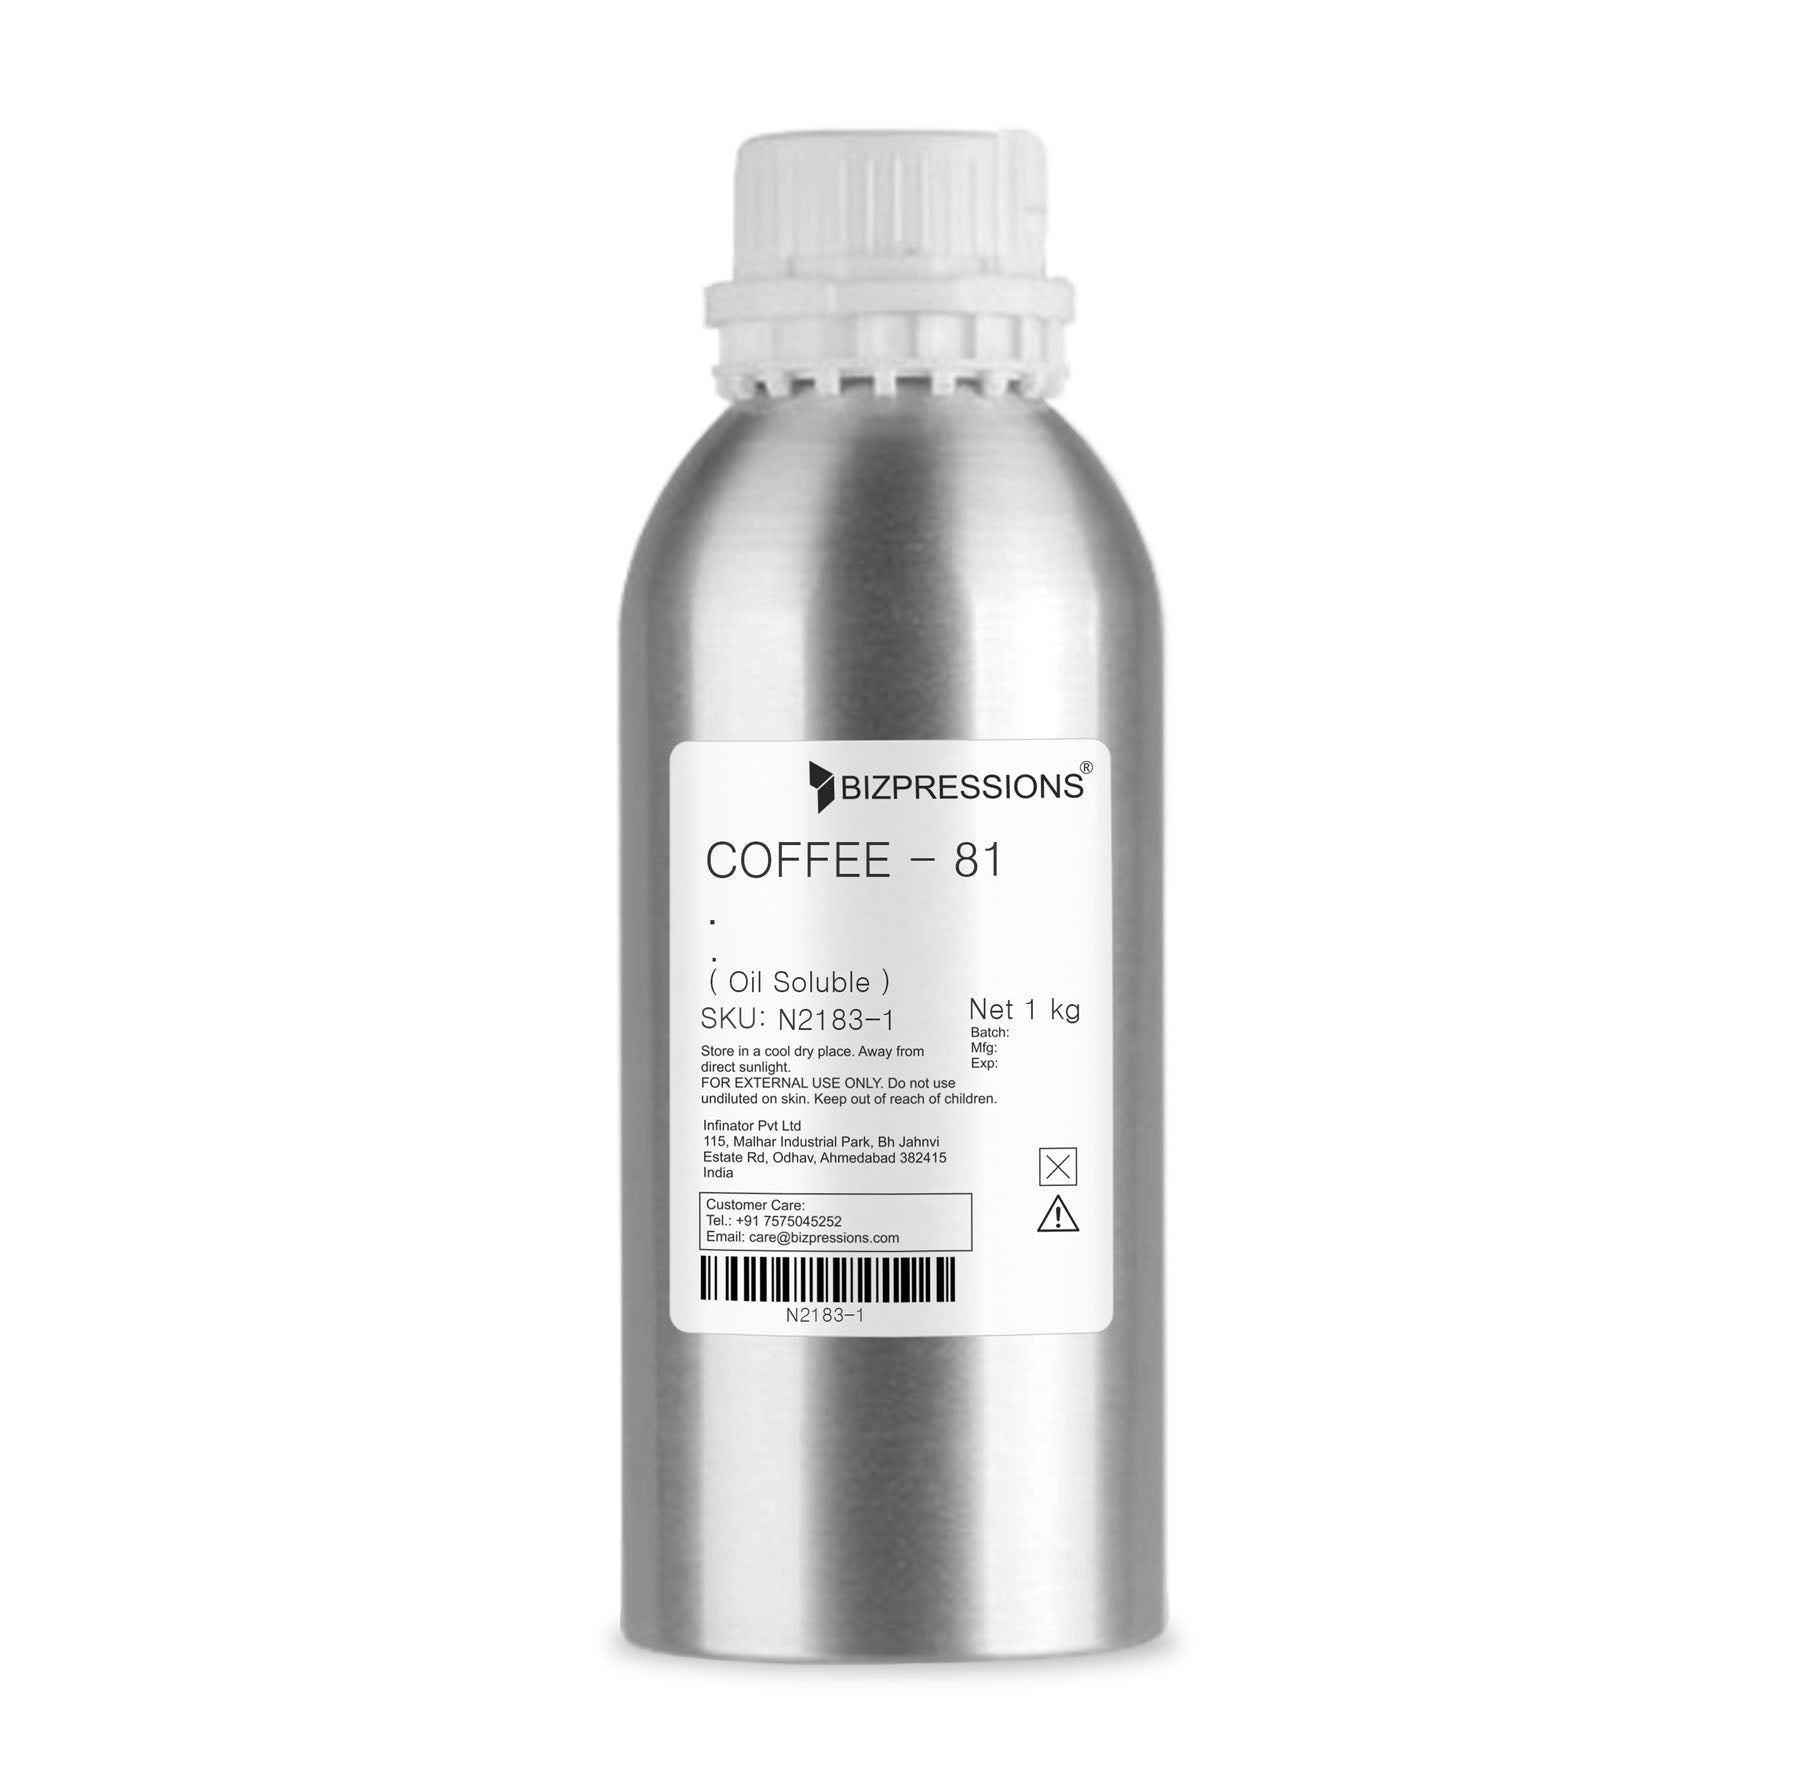 COFFEE - 81 - Fragrance ( Oil Soluble ) - 1 kg